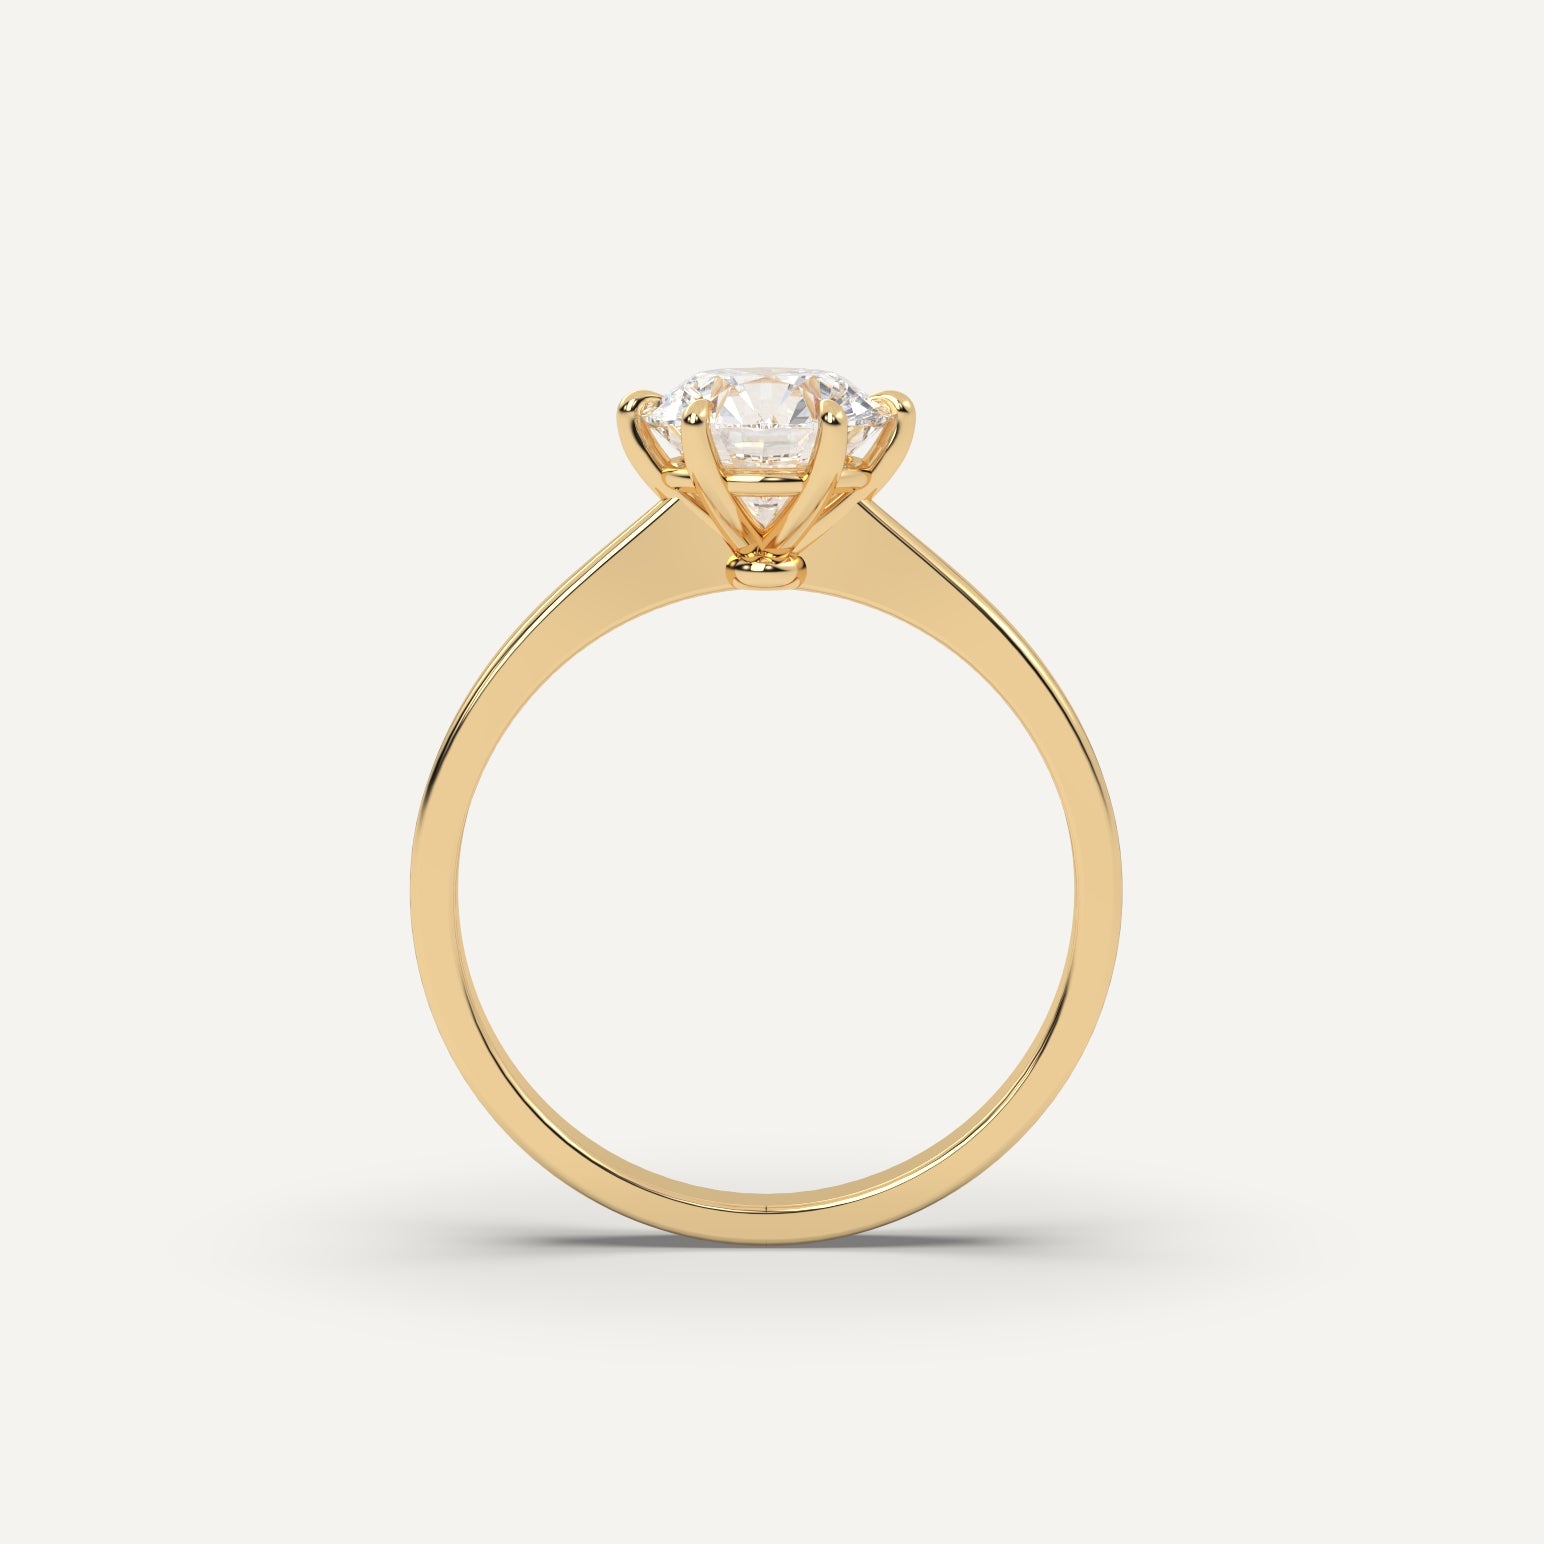 Round Cut Diamond Engagement Ring - 1 carat